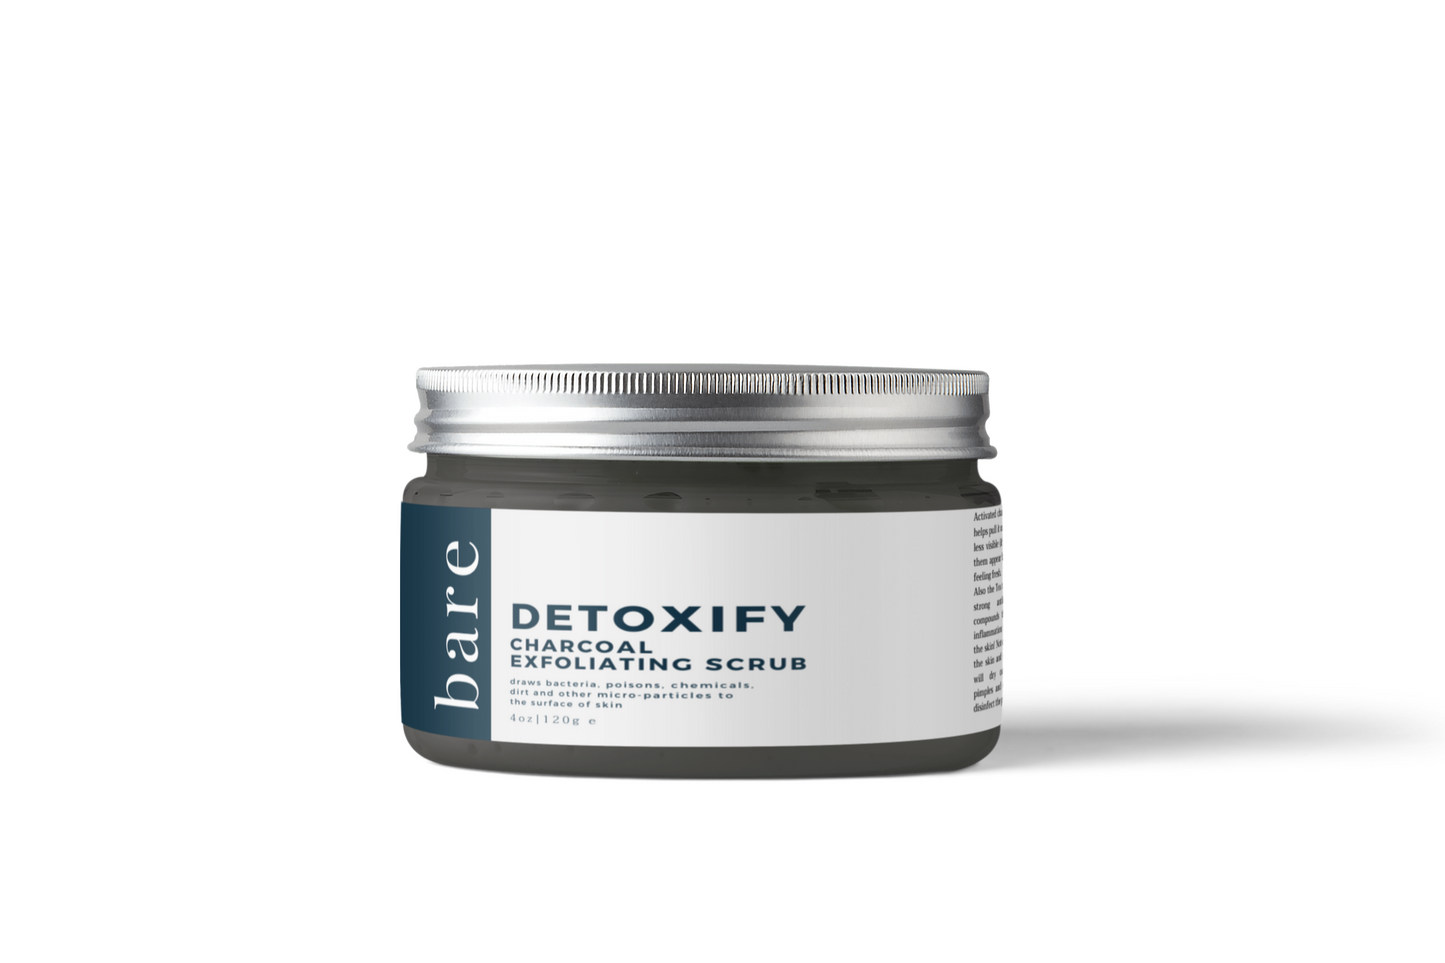 Detoxify Charcoal Exfoliating scrub